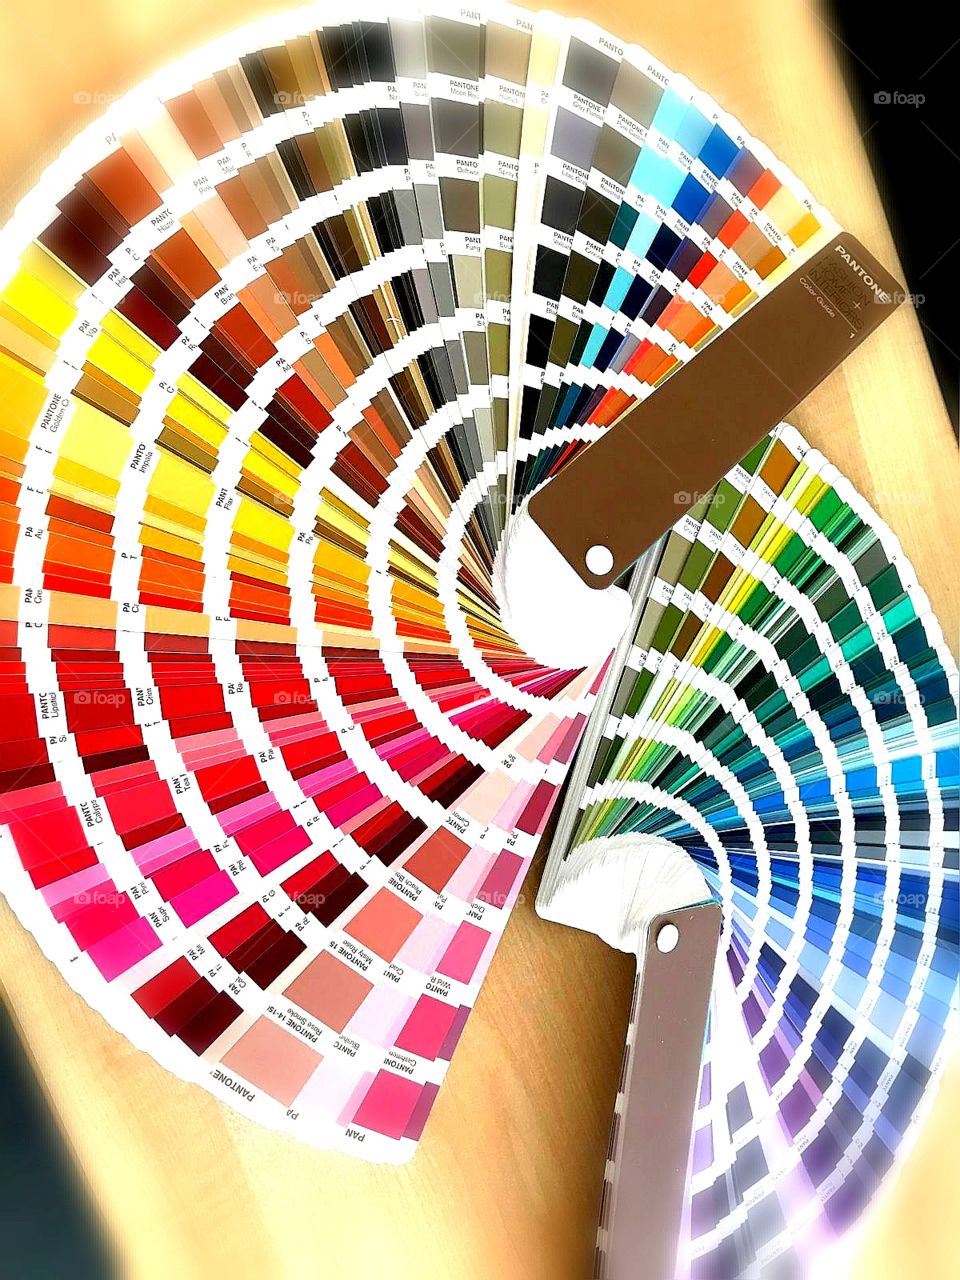 CLASH OF COLORW - Full color palette!